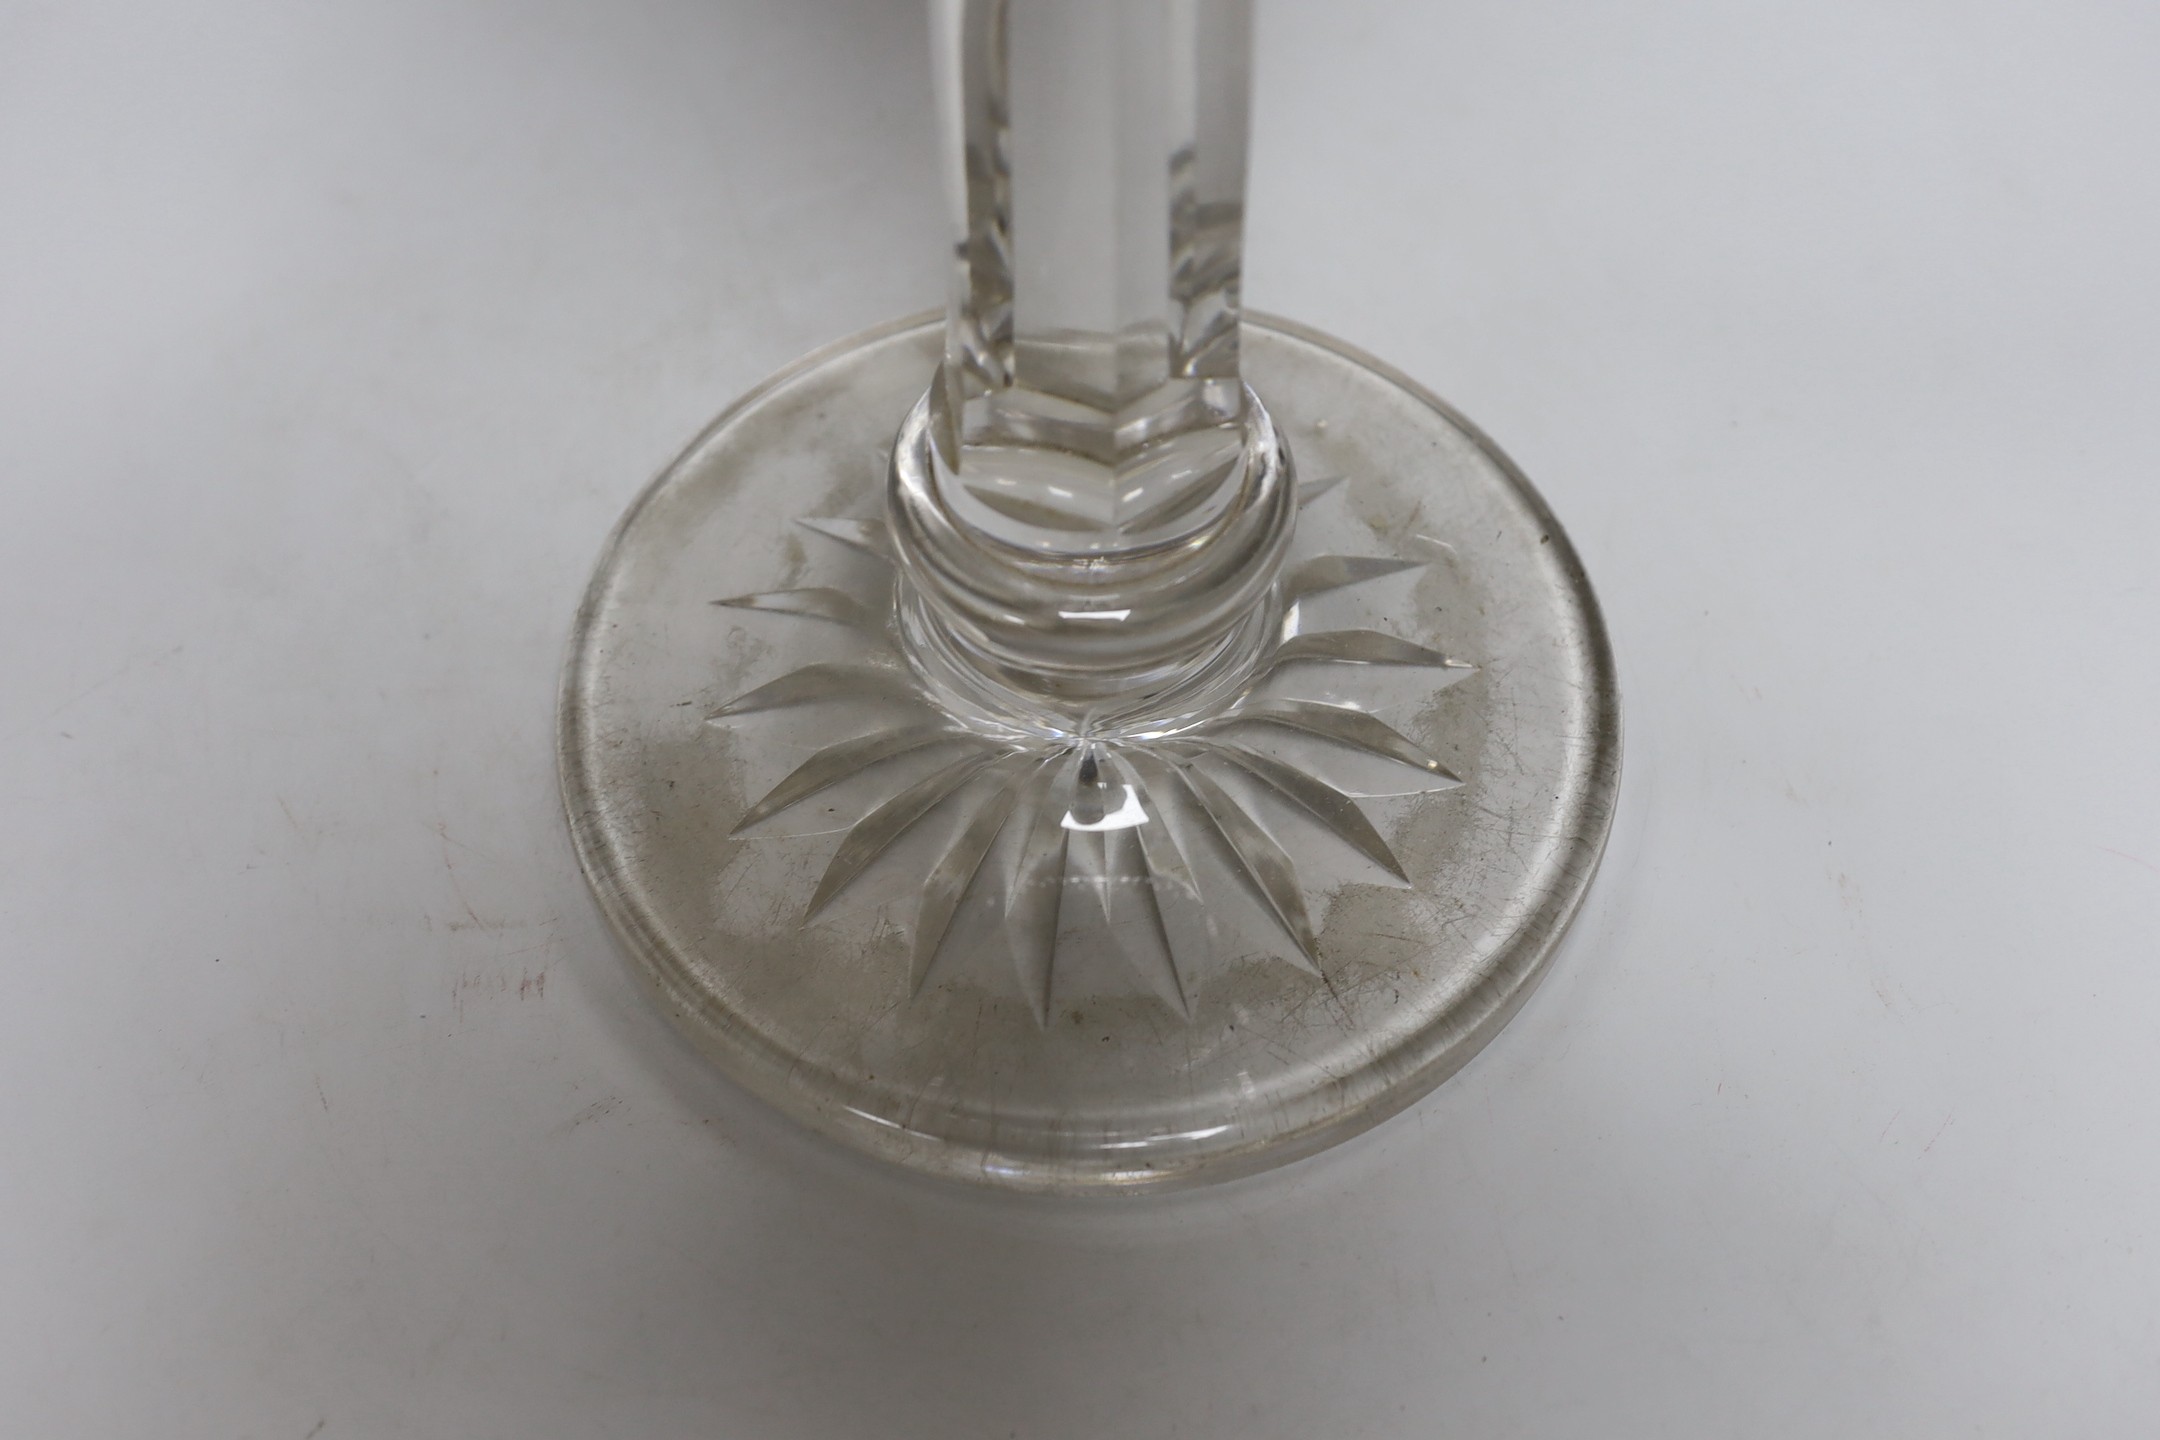 A Victorian clear glass oil lamp. 73cm tall